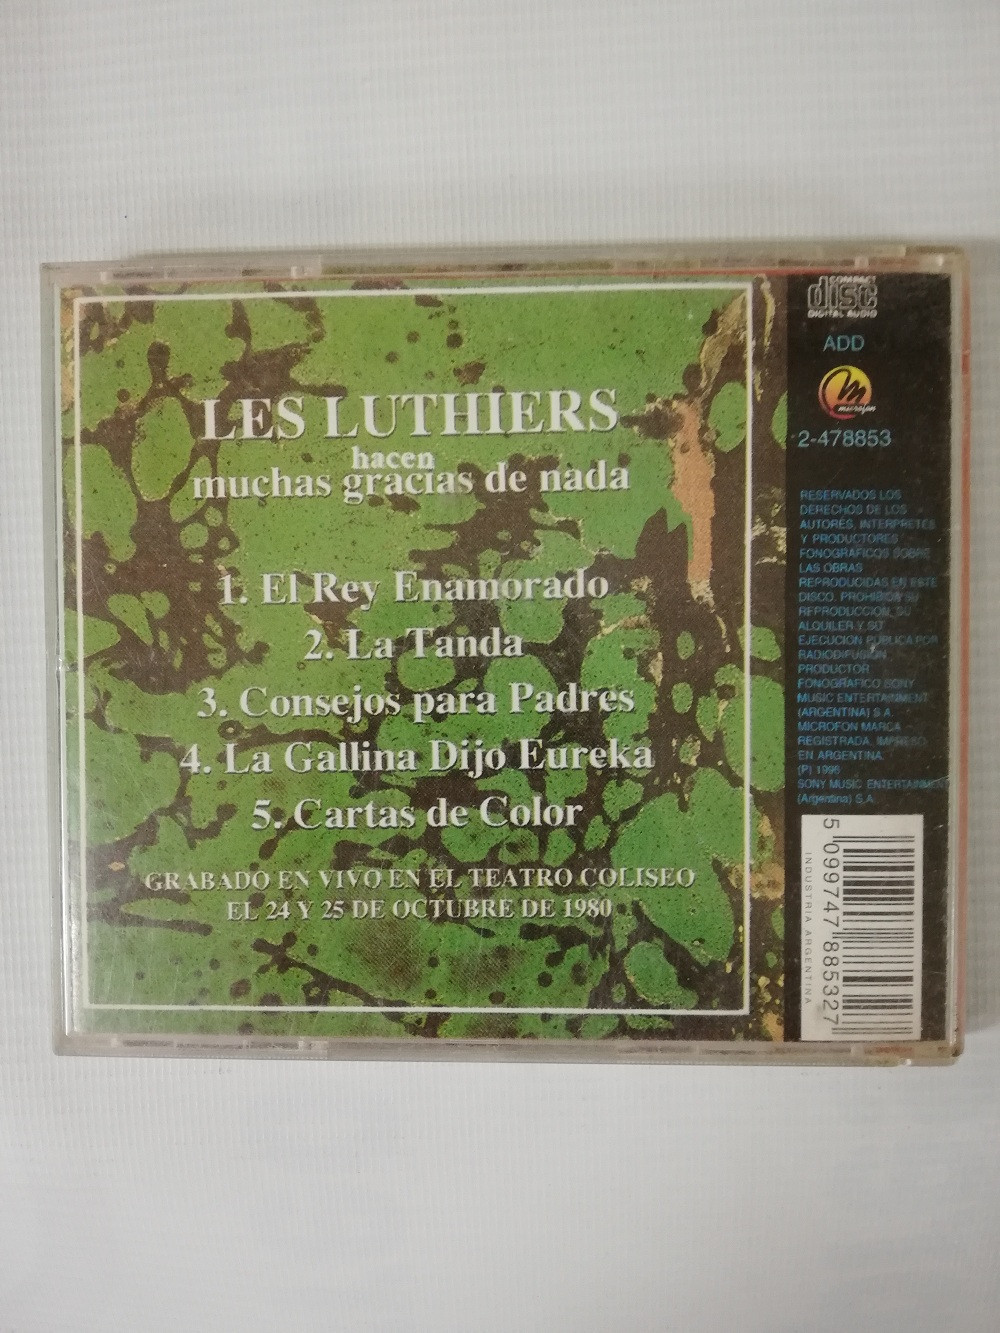 Imagen CD LES LUTHIERS - HACEN MUCHAS GRACIAS DE NADA 2